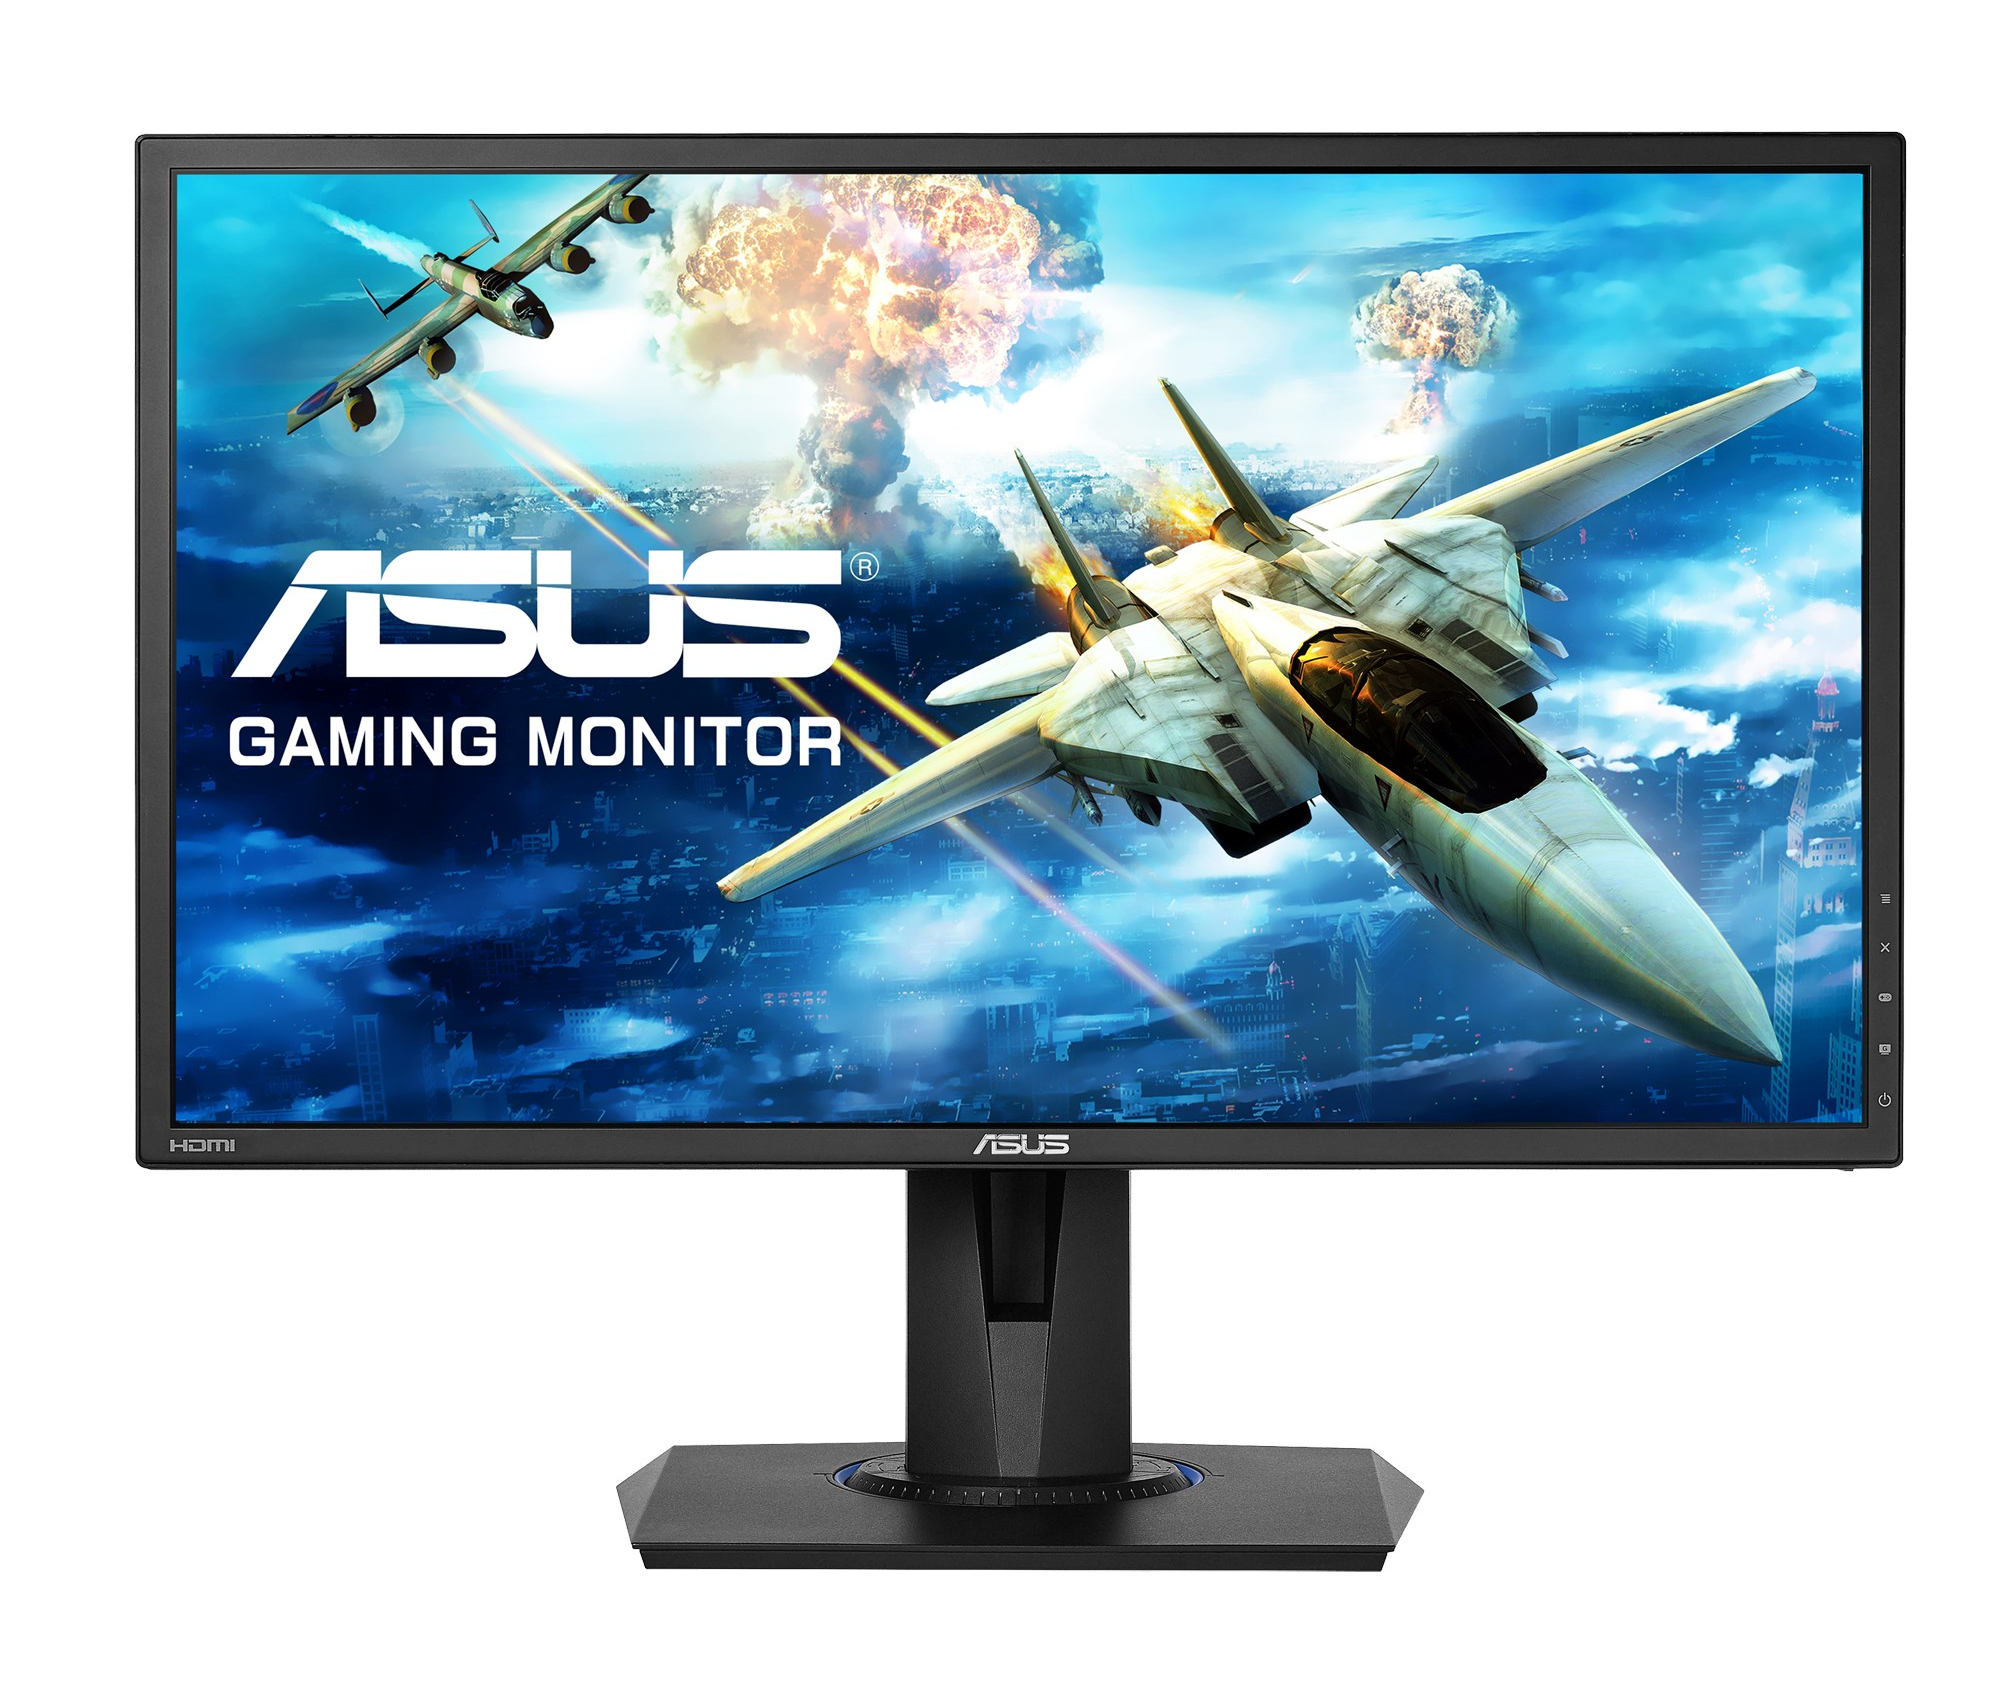 Asus VG245H 24in Gaming Monitor